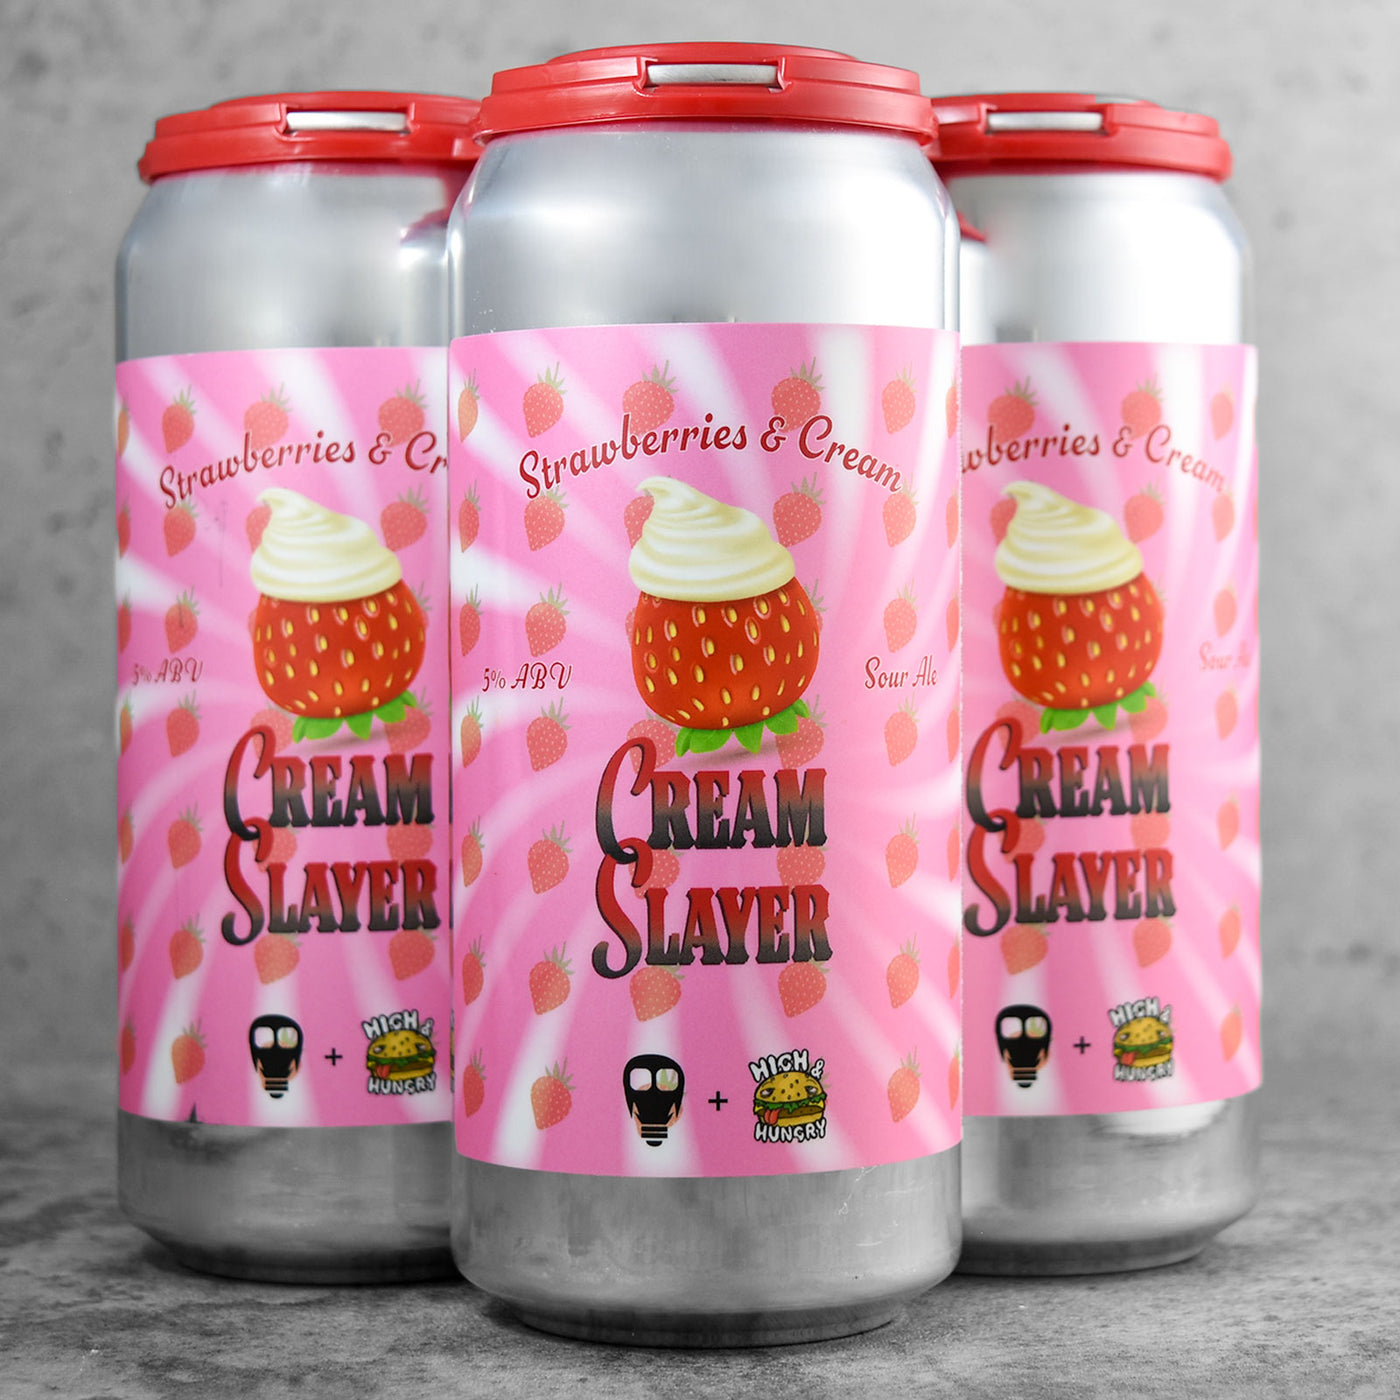 Creative Creature x High & Hungry - Cream Slayer - Strawberries & Cream